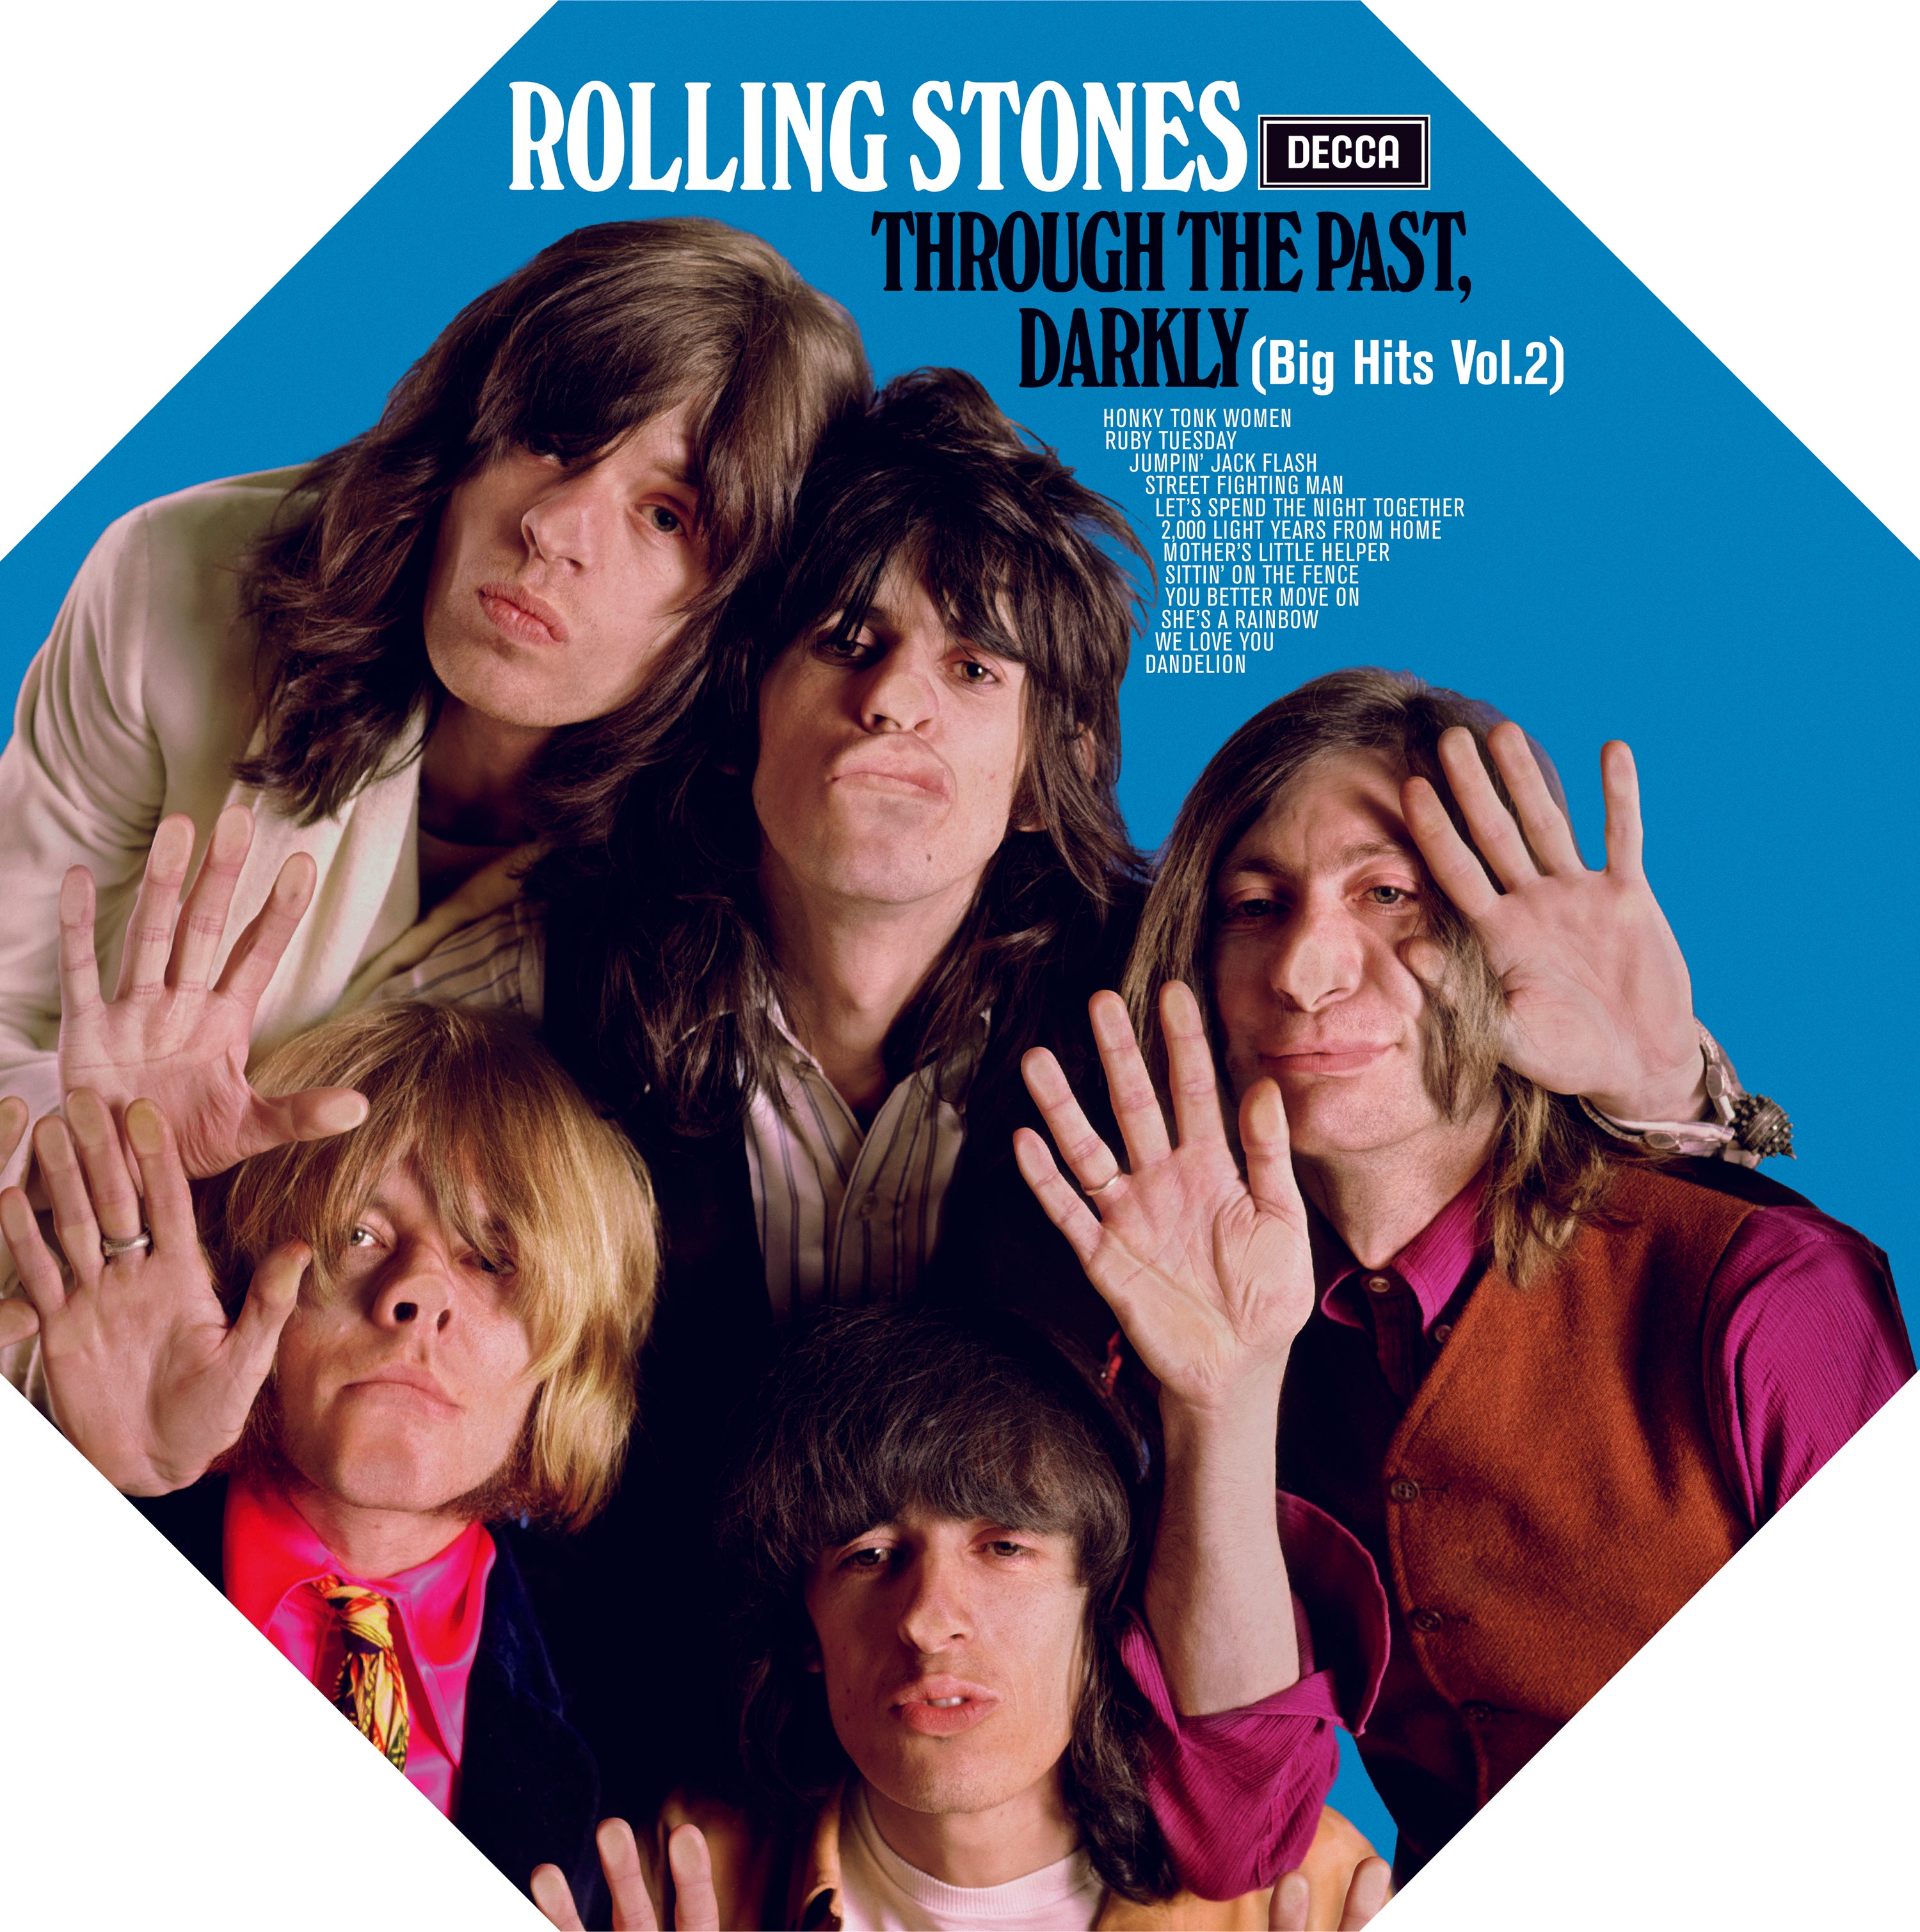 The Rolling Stones - Through The Past, Darkly (Big Hits Vol. 2 - UK): Vinyl LP